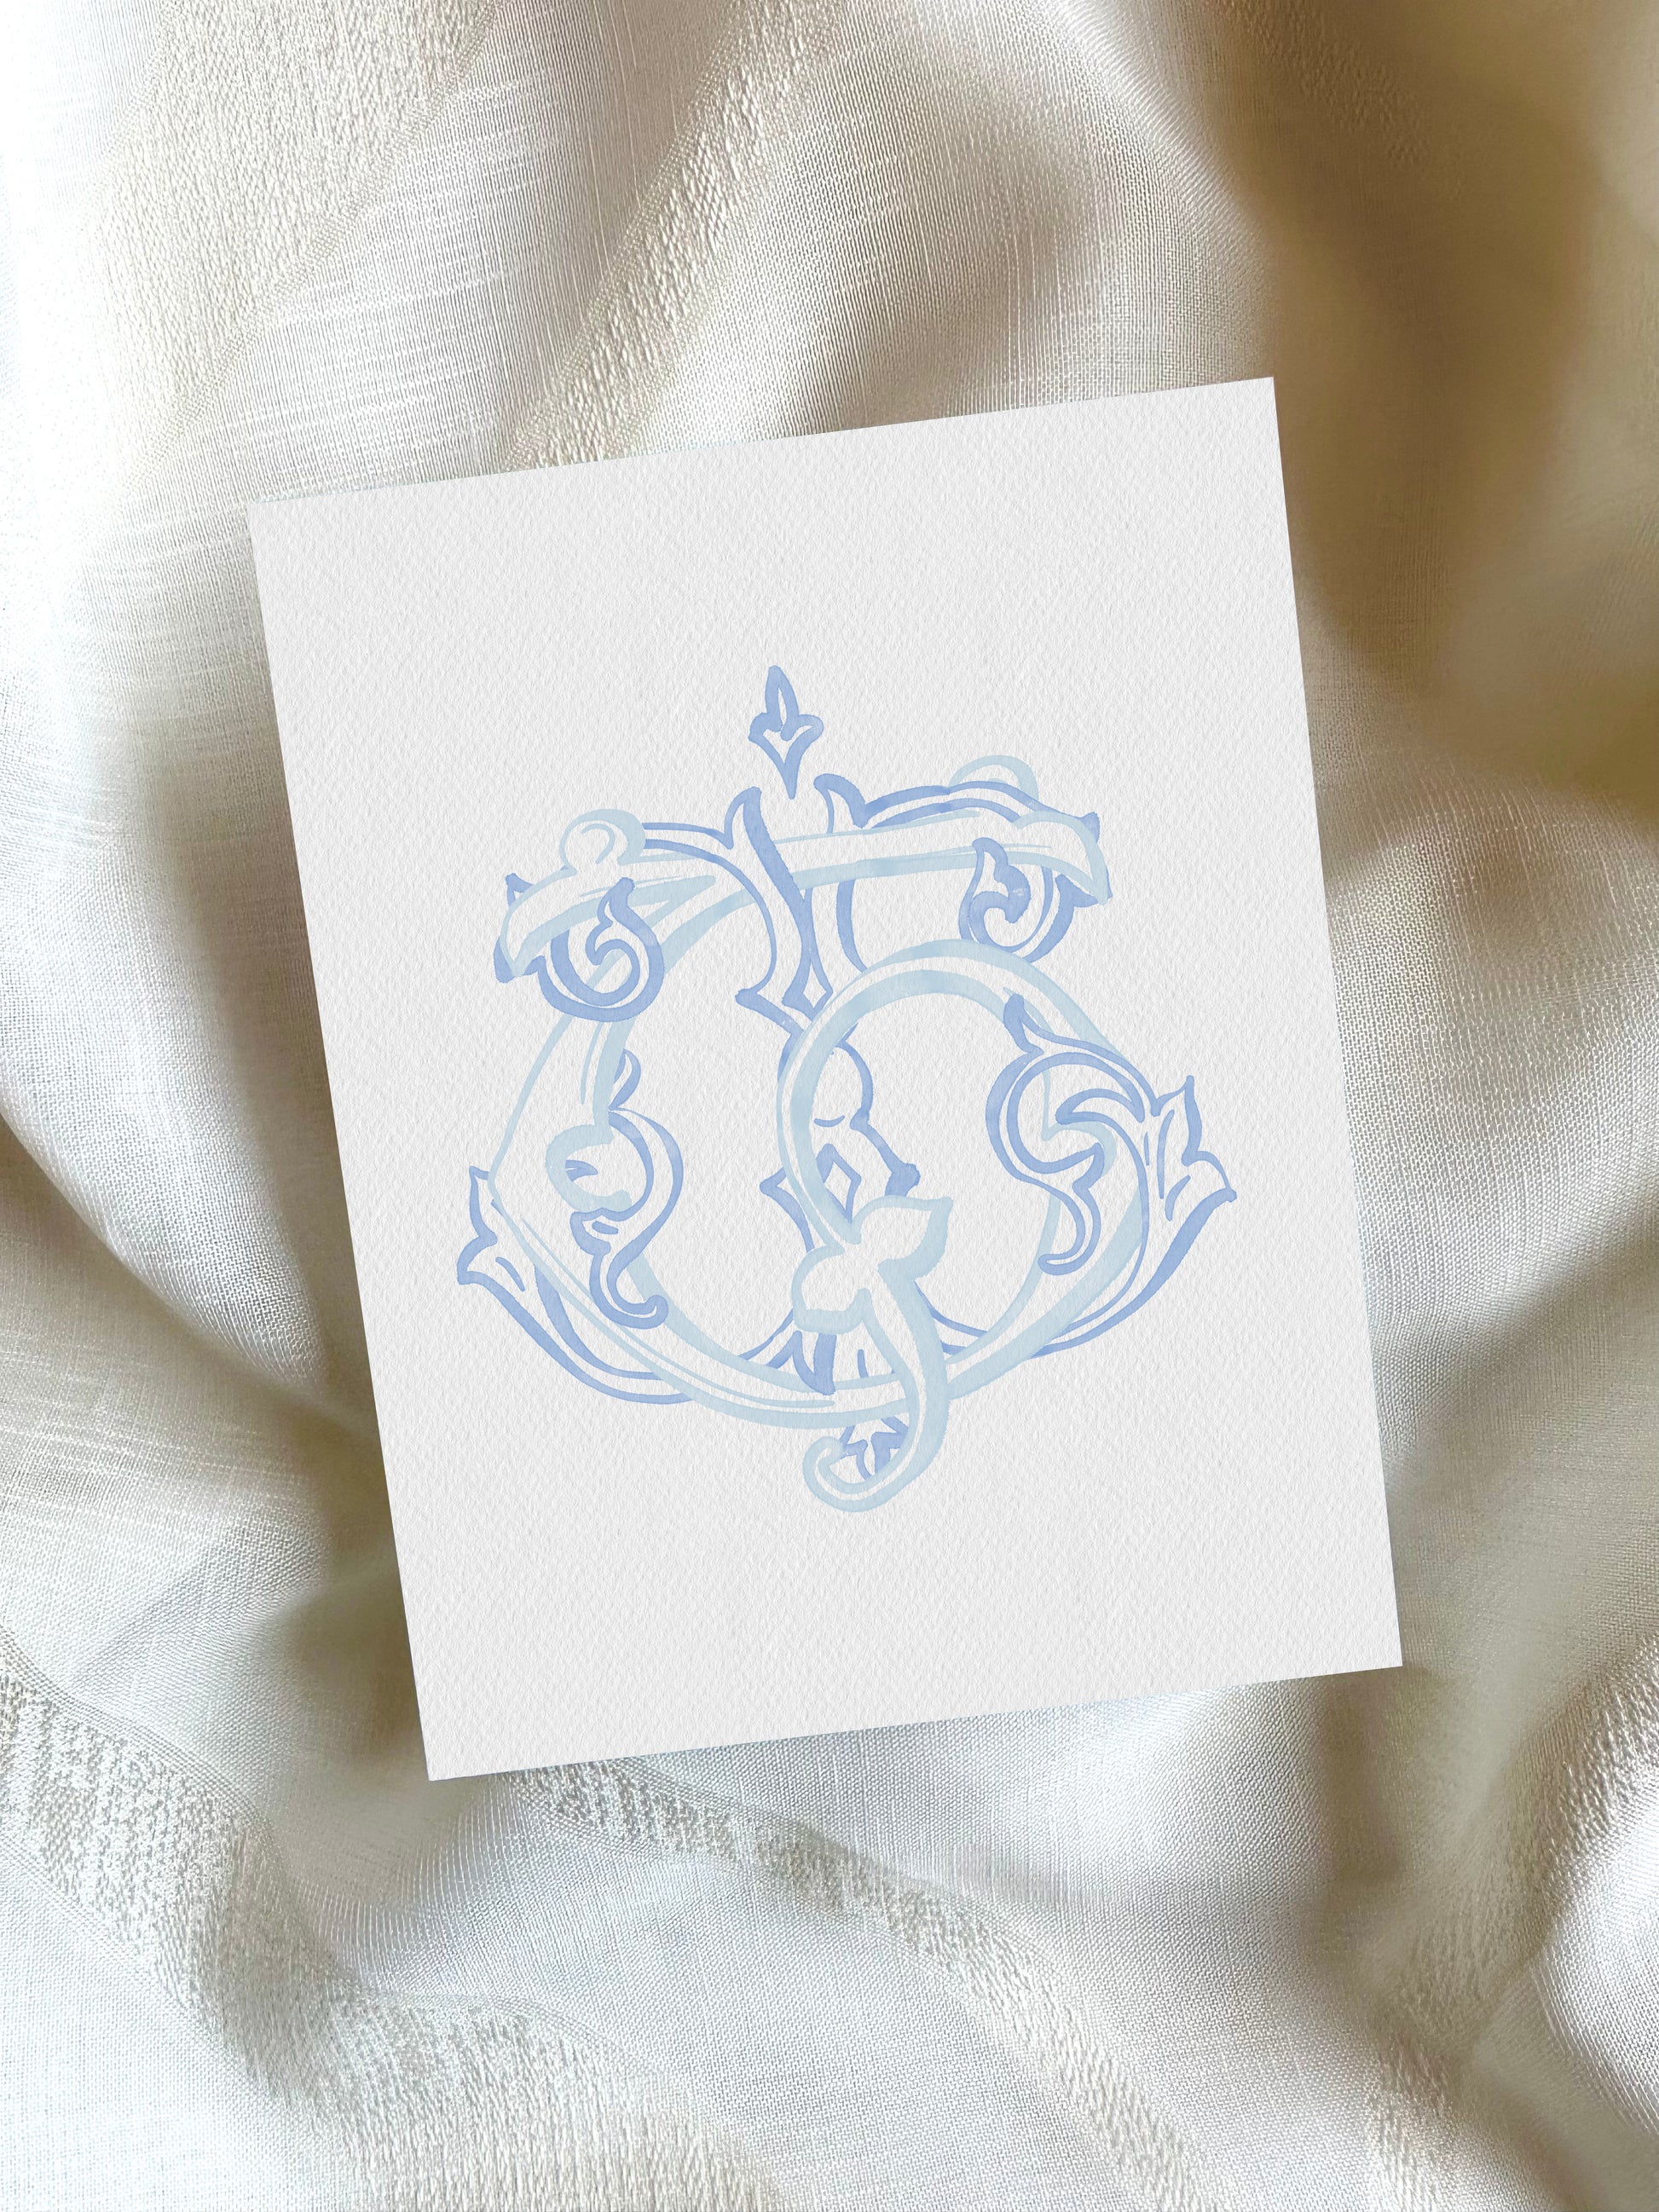 2 Letter Monogram with Letters TX XT | Digital Download - Wedding Monogram SVG, Personal Logo, Wedding Logo for Wedding Invitations The Wedding Crest Lab